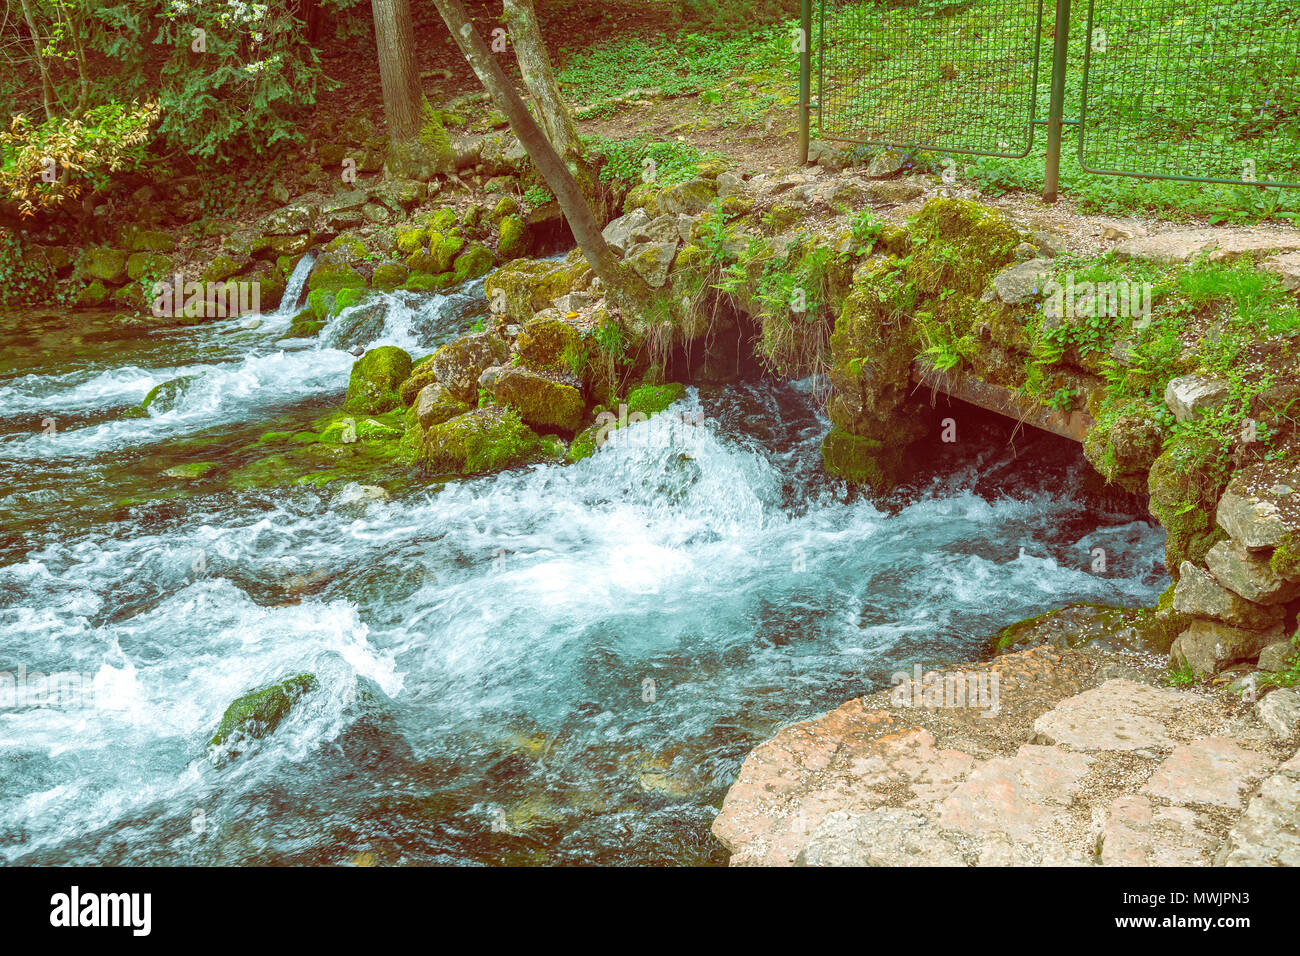 The of the river in nature park Vrelo Bosne near Sarajevo, Bosnia and Herzegovina Stock Photo - Alamy